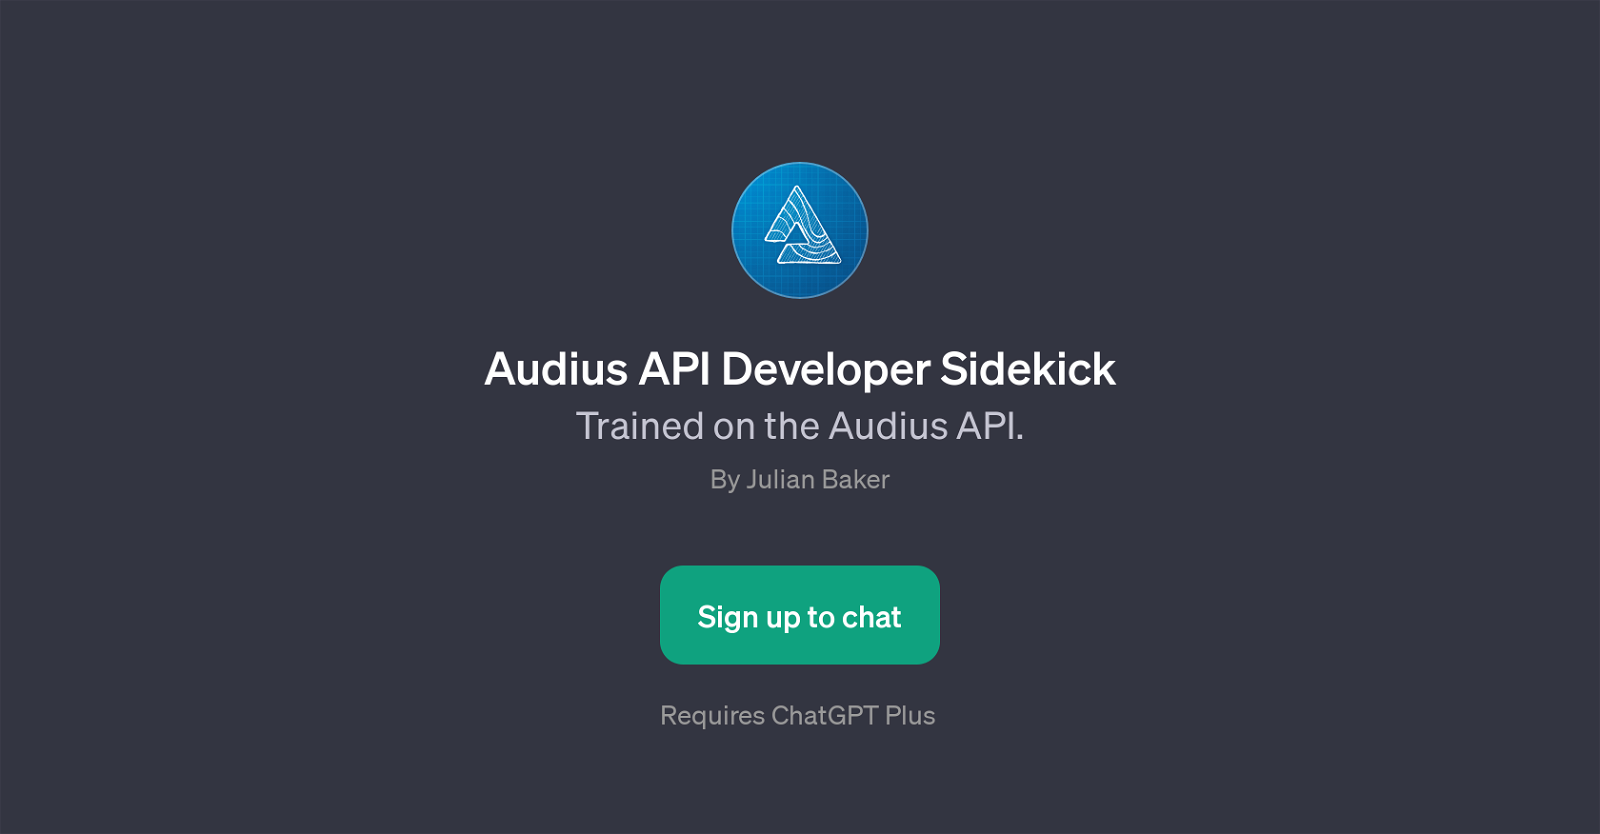 Audius API Developer Sidekick website